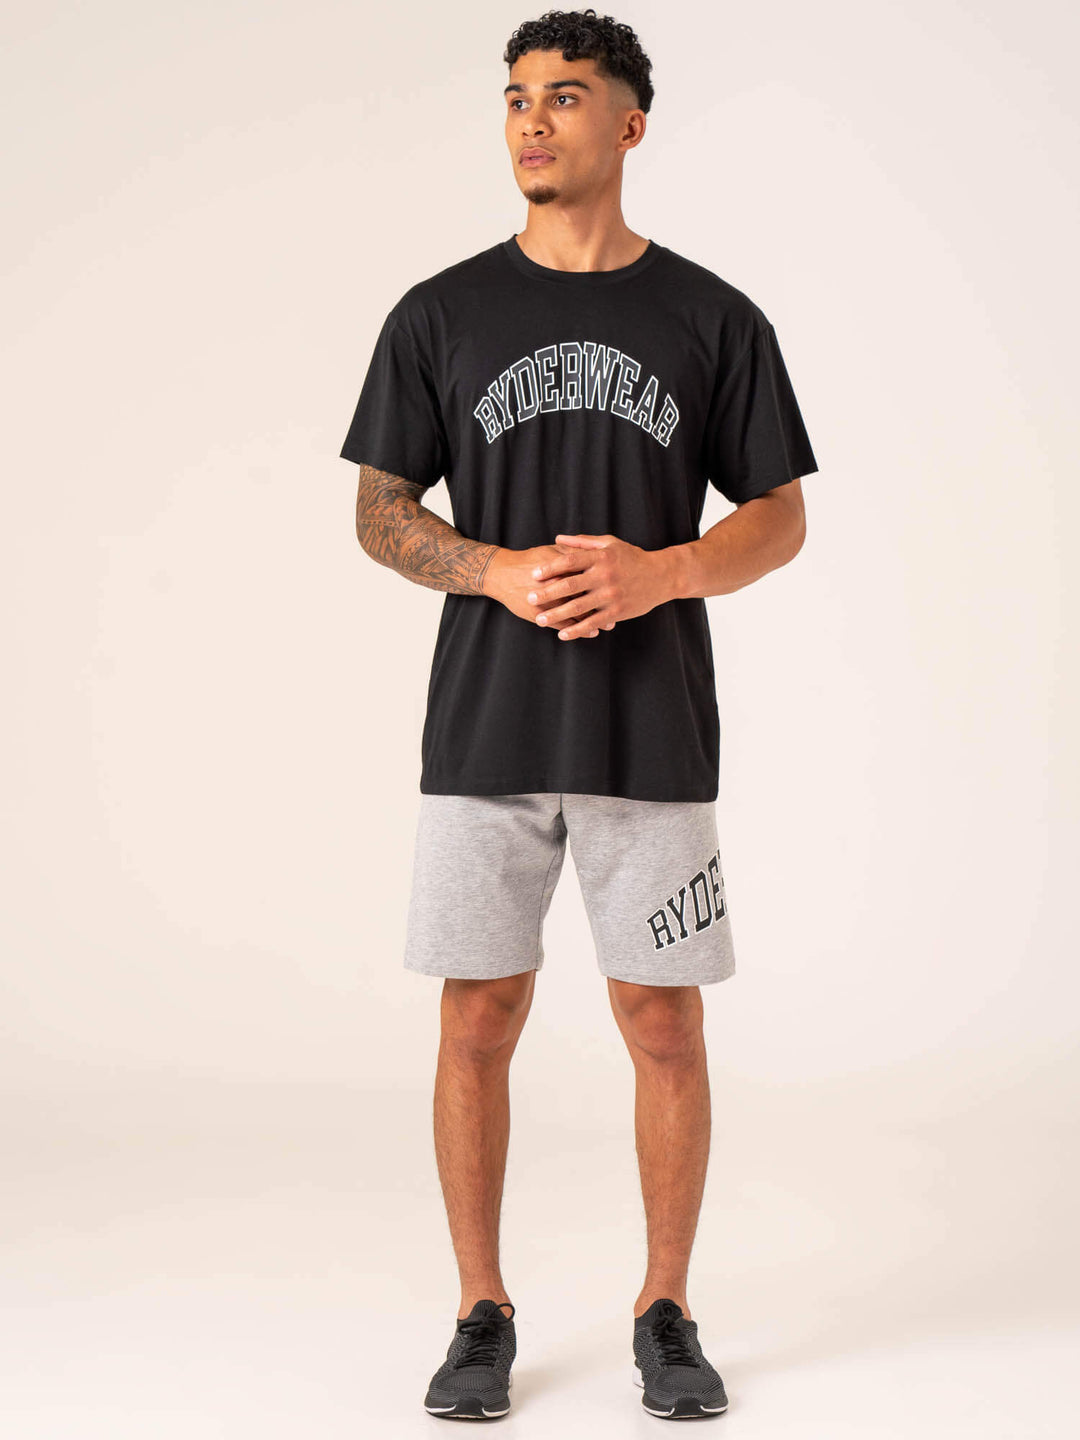 Men's Collegiate Track Short - Grey Marl - Ryderwear